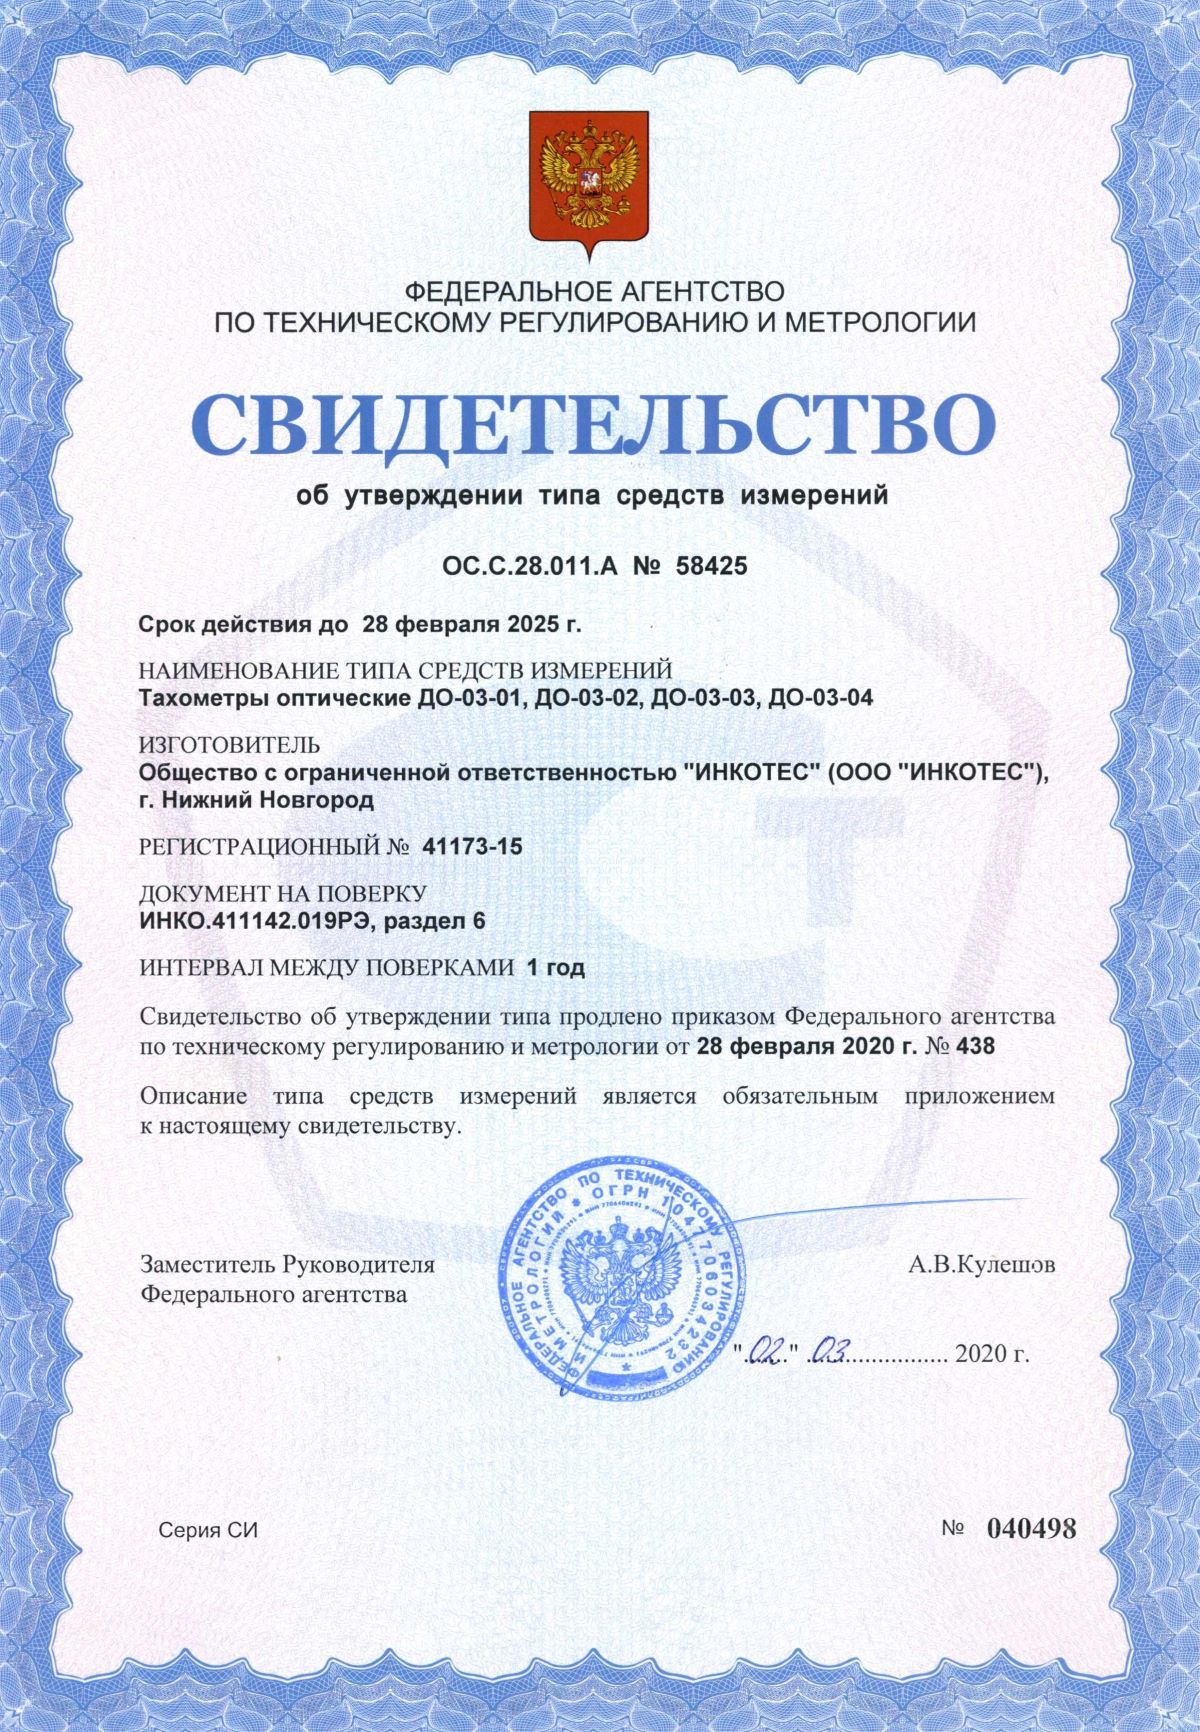 Сертификат ДО-03